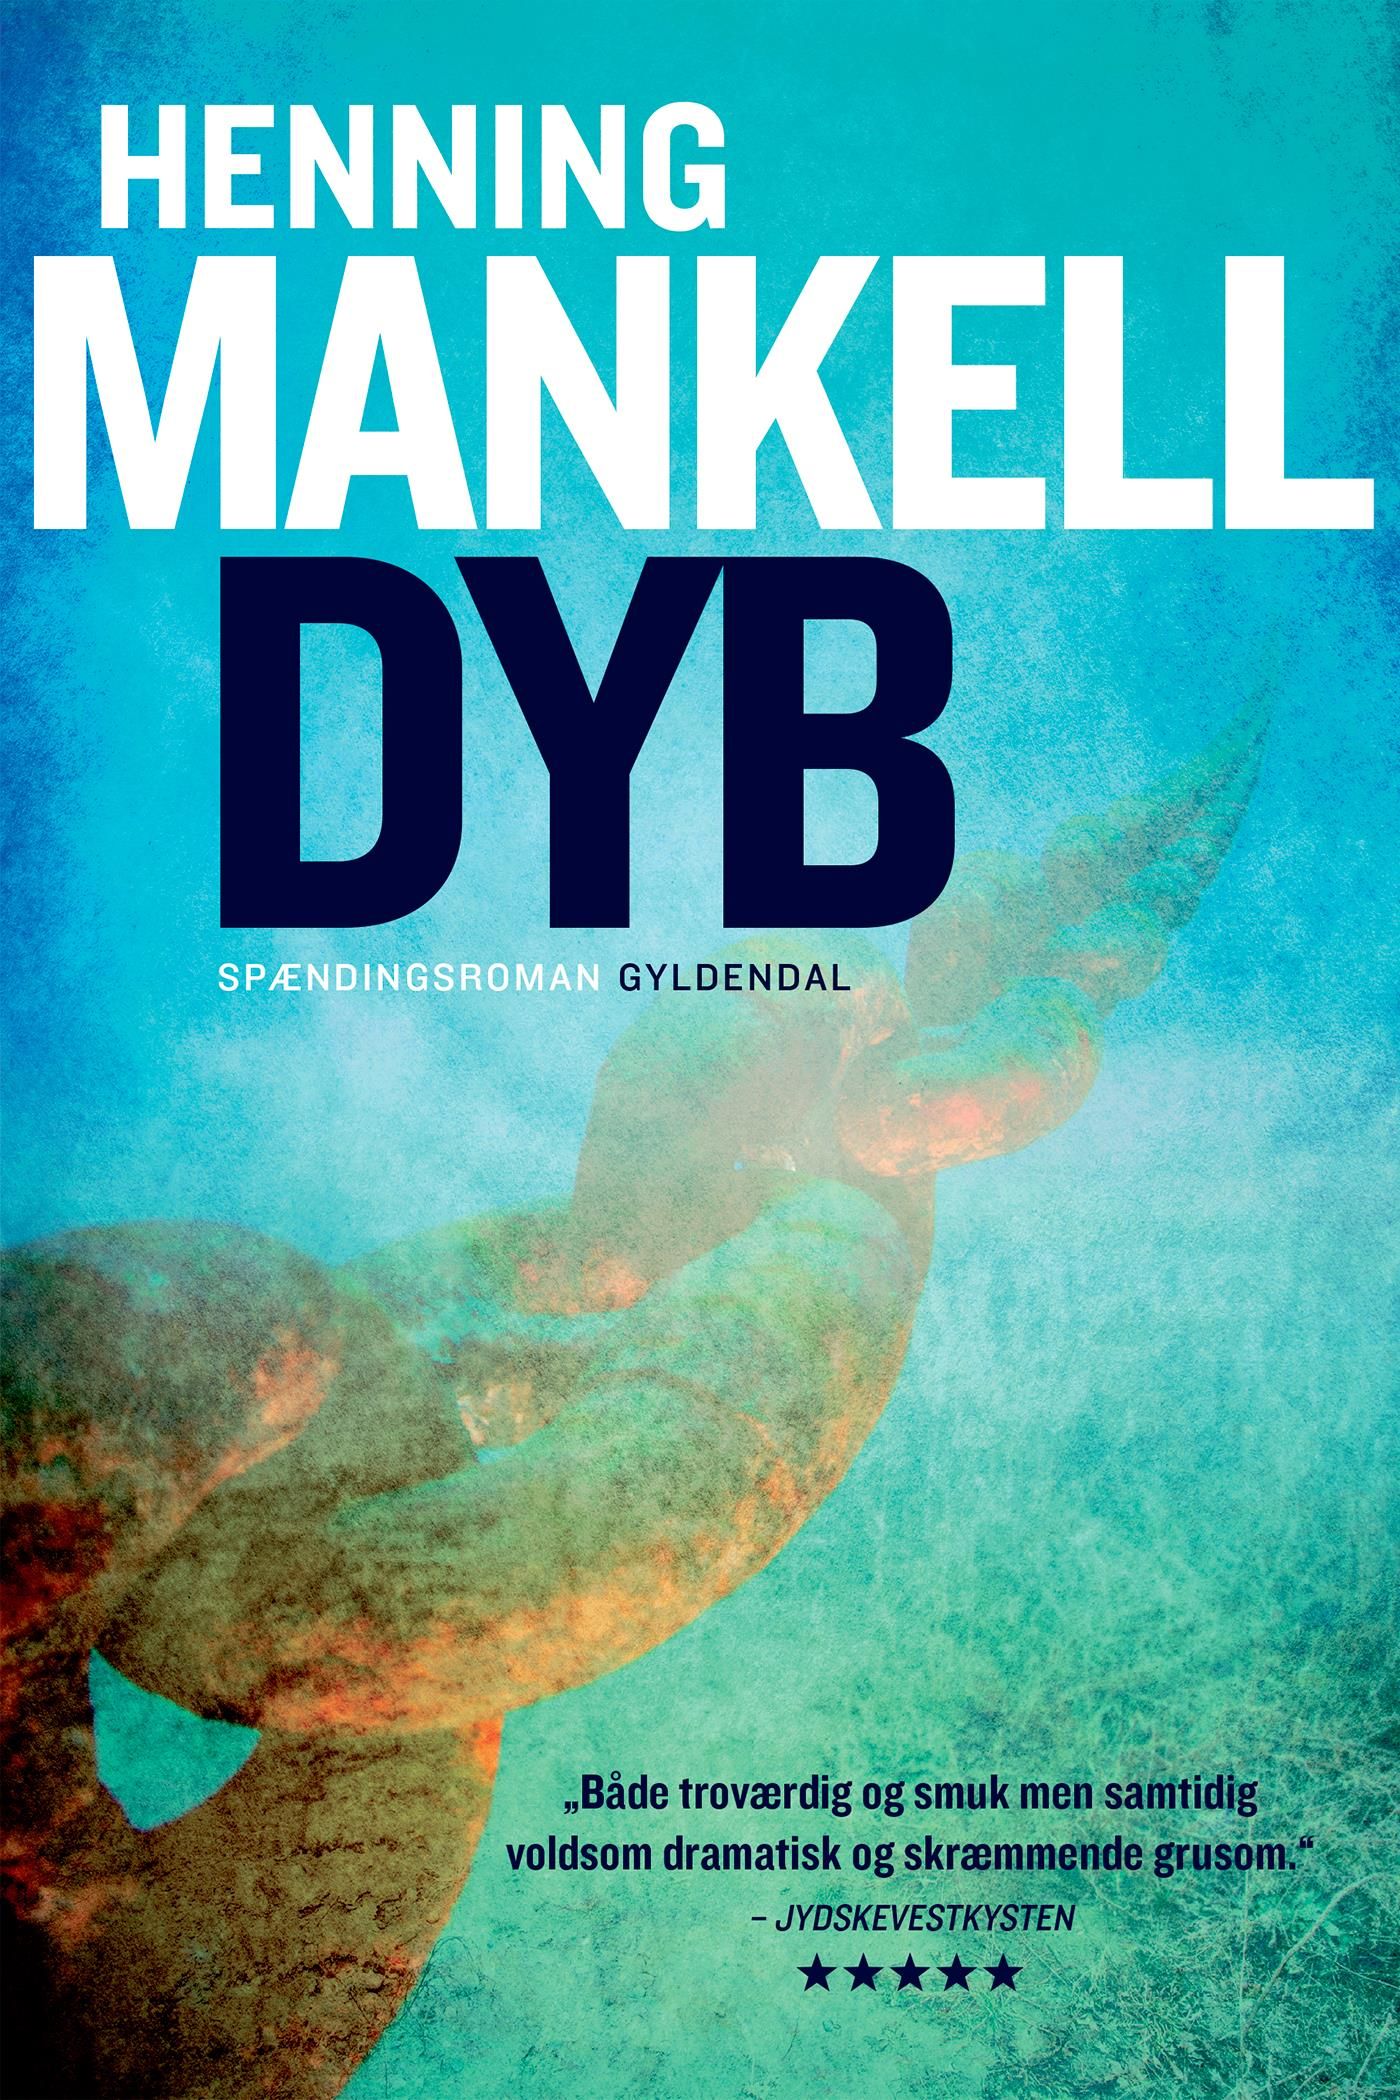 Dyb, eBook by Henning Mankell